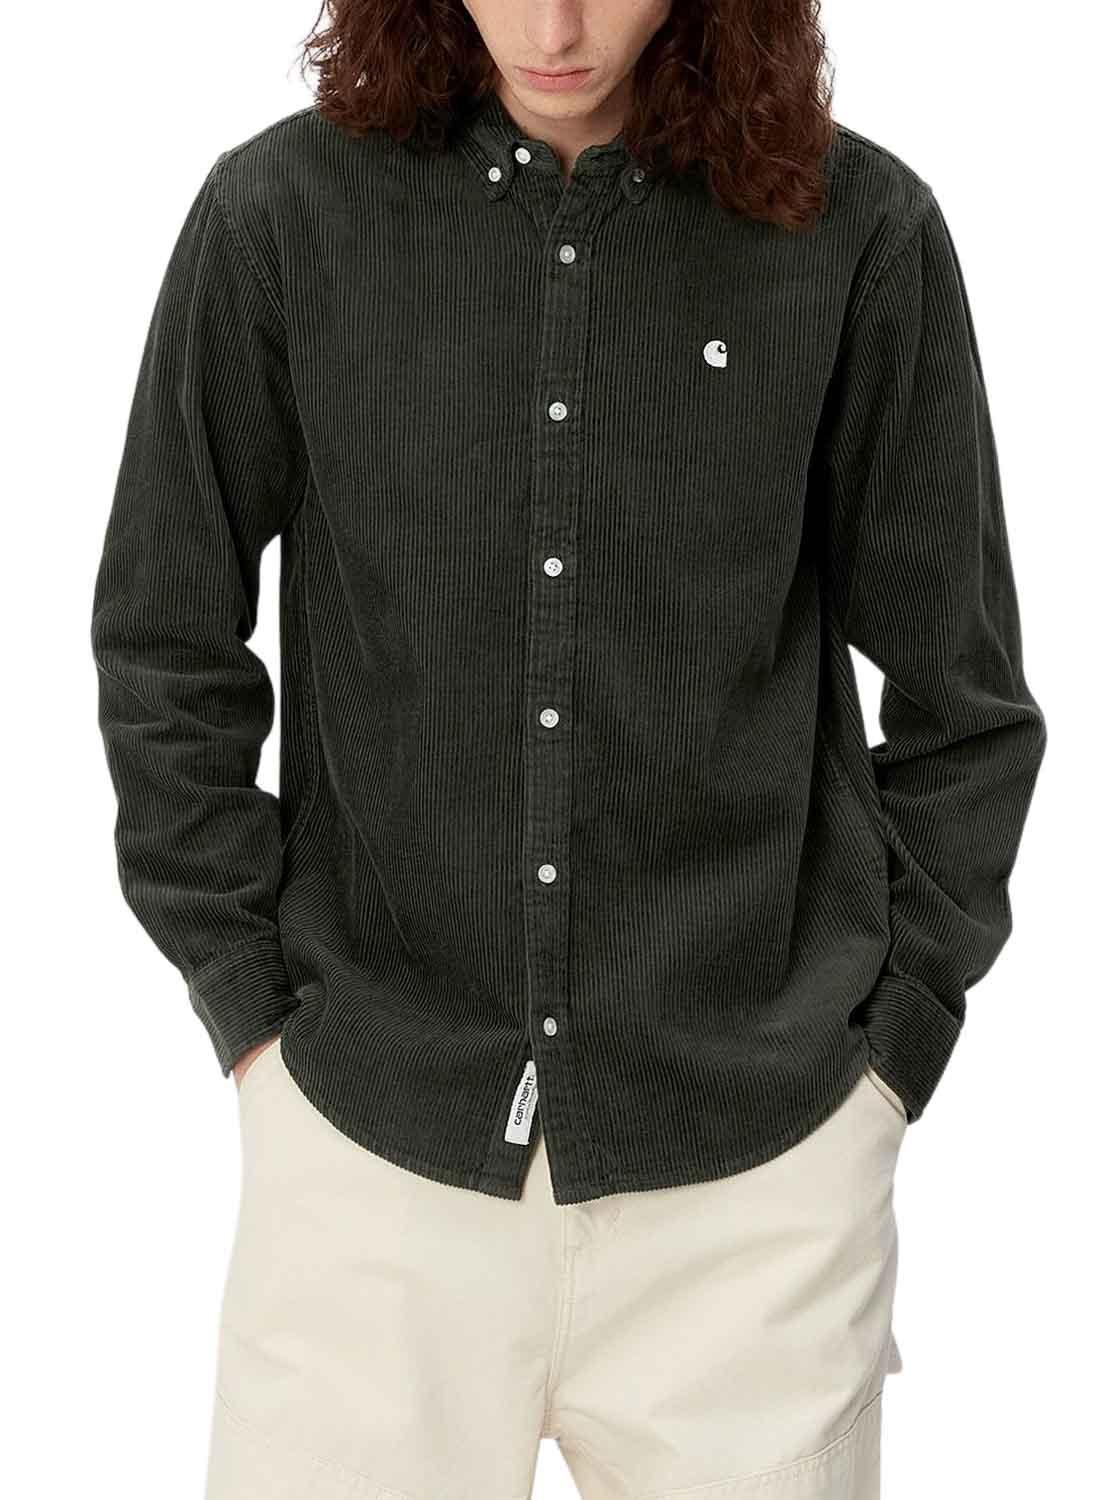 Carhartt Wip - Camisa Para Hombre Verde - L/S Madison Cord Shirt